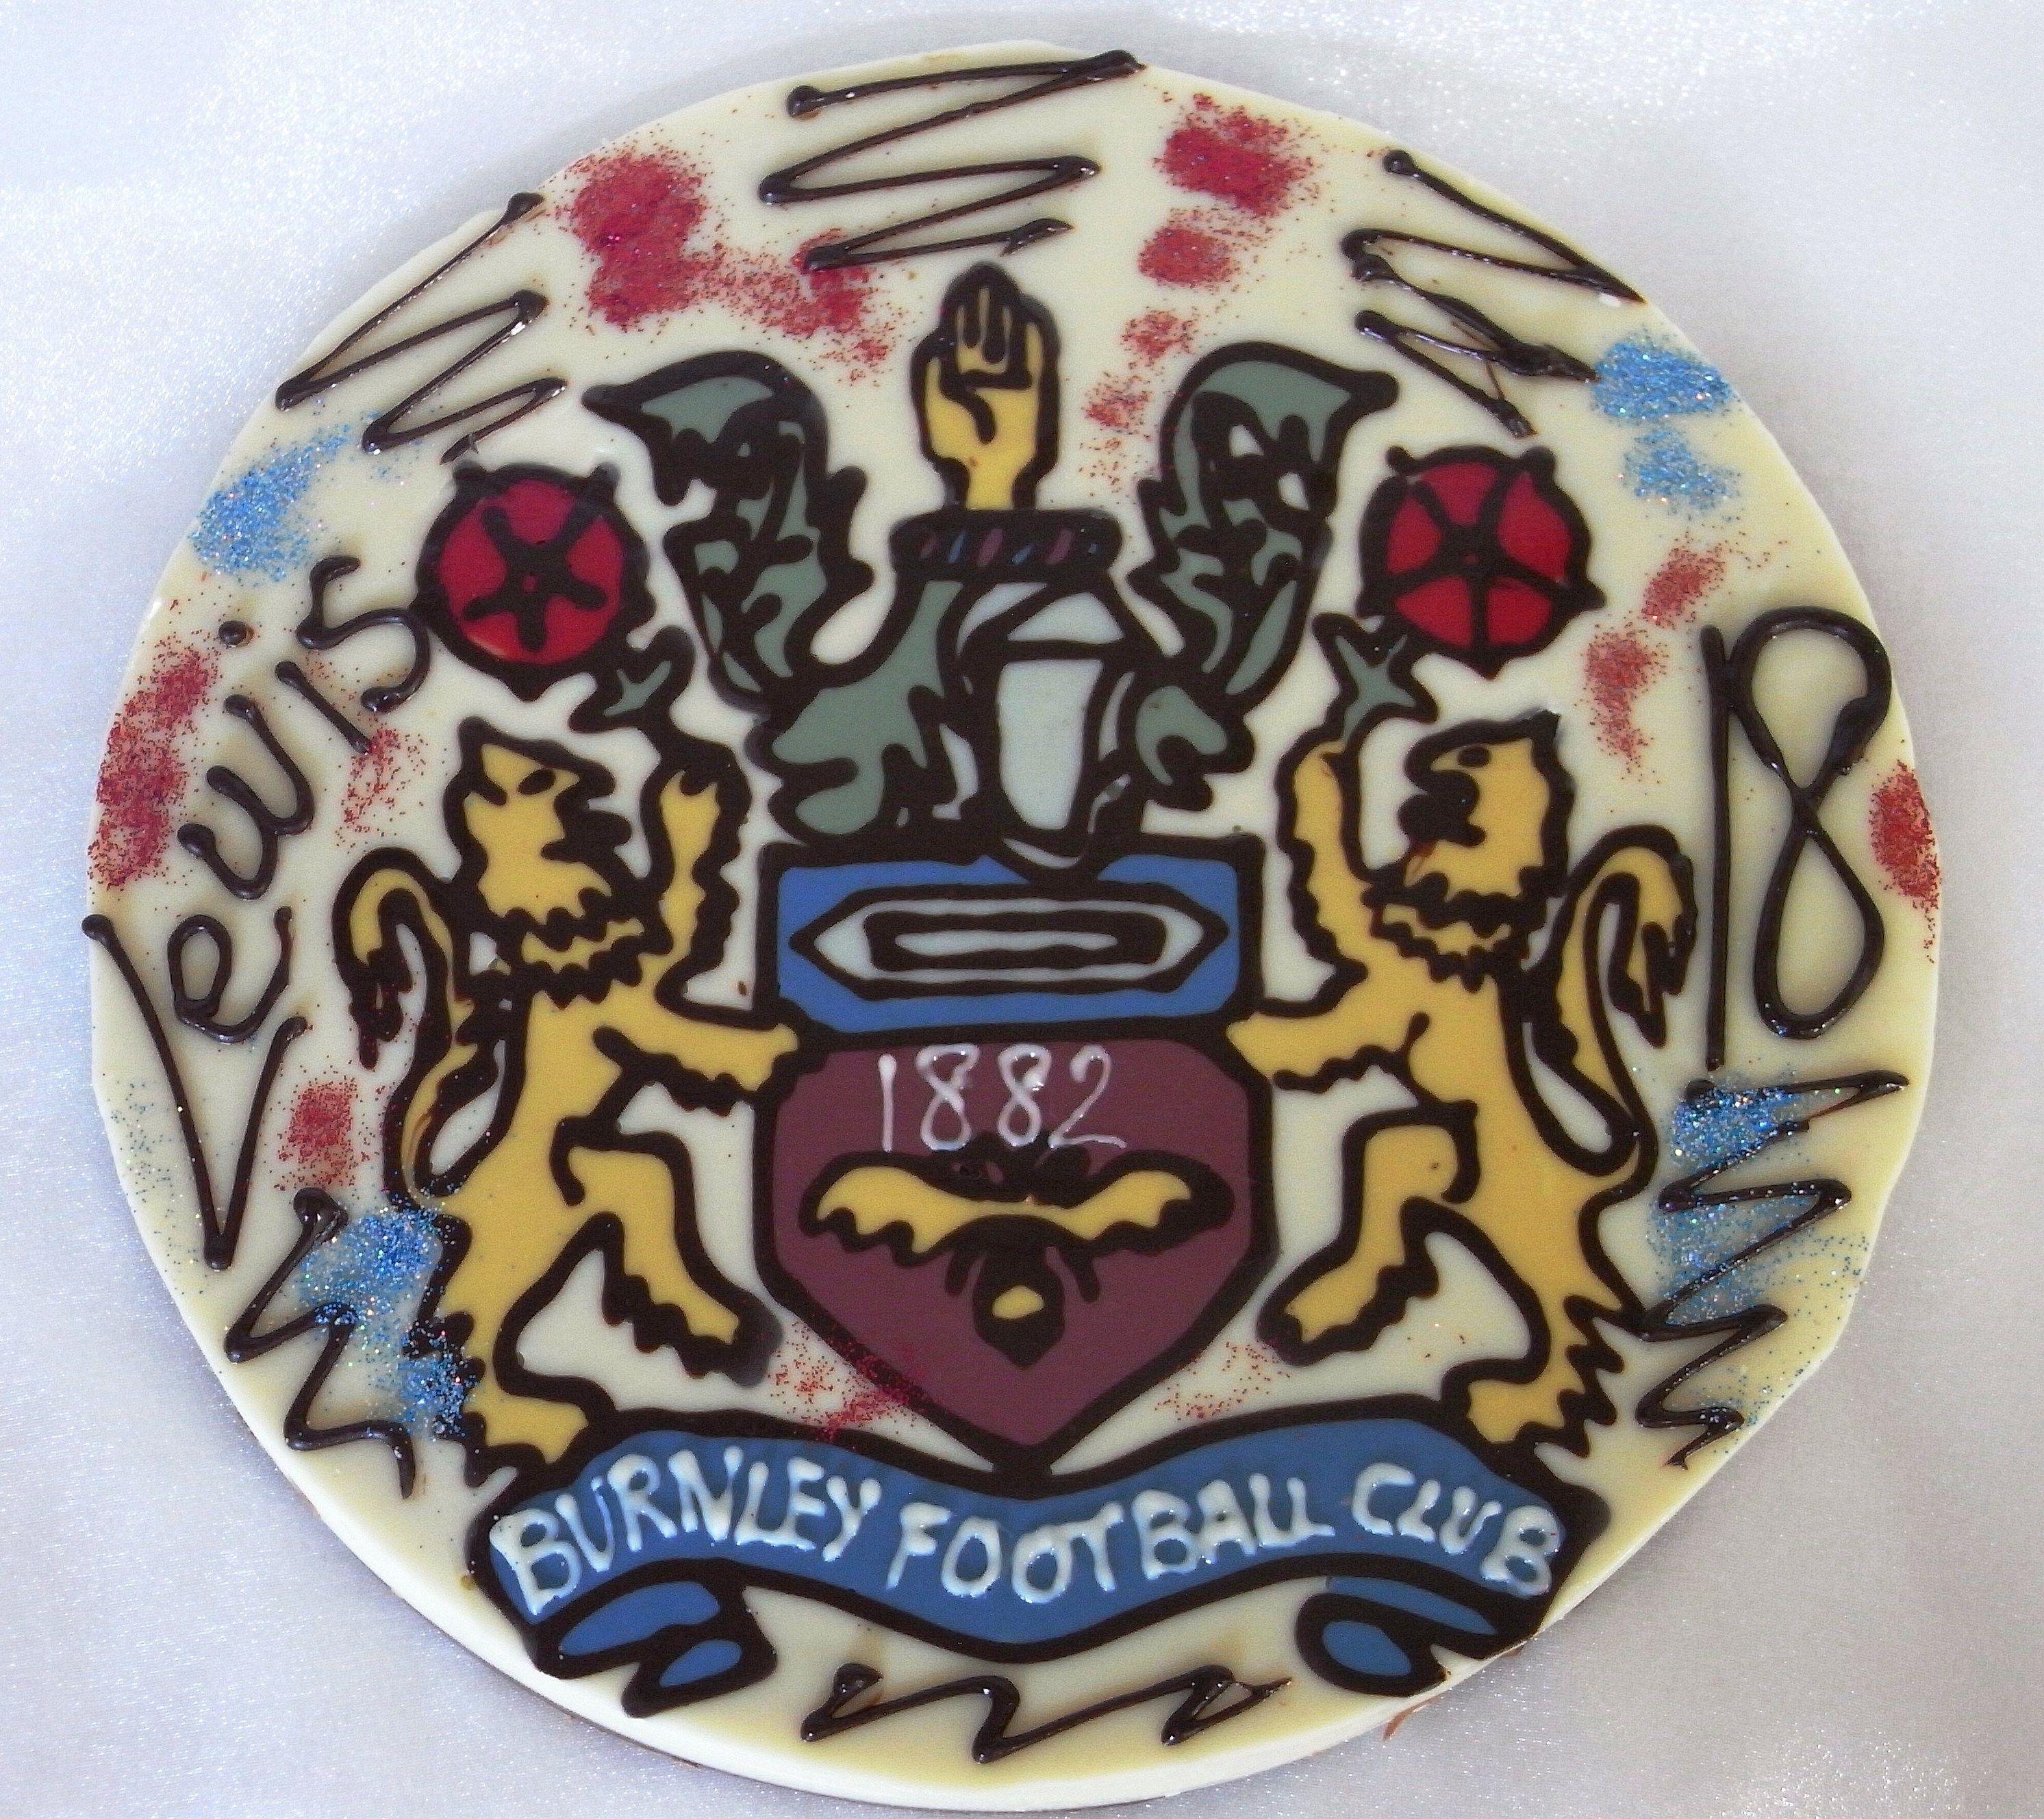 Burnley Logo - Hand Made Chocolate Burnley Football Club Logo Plaque. Chocolate